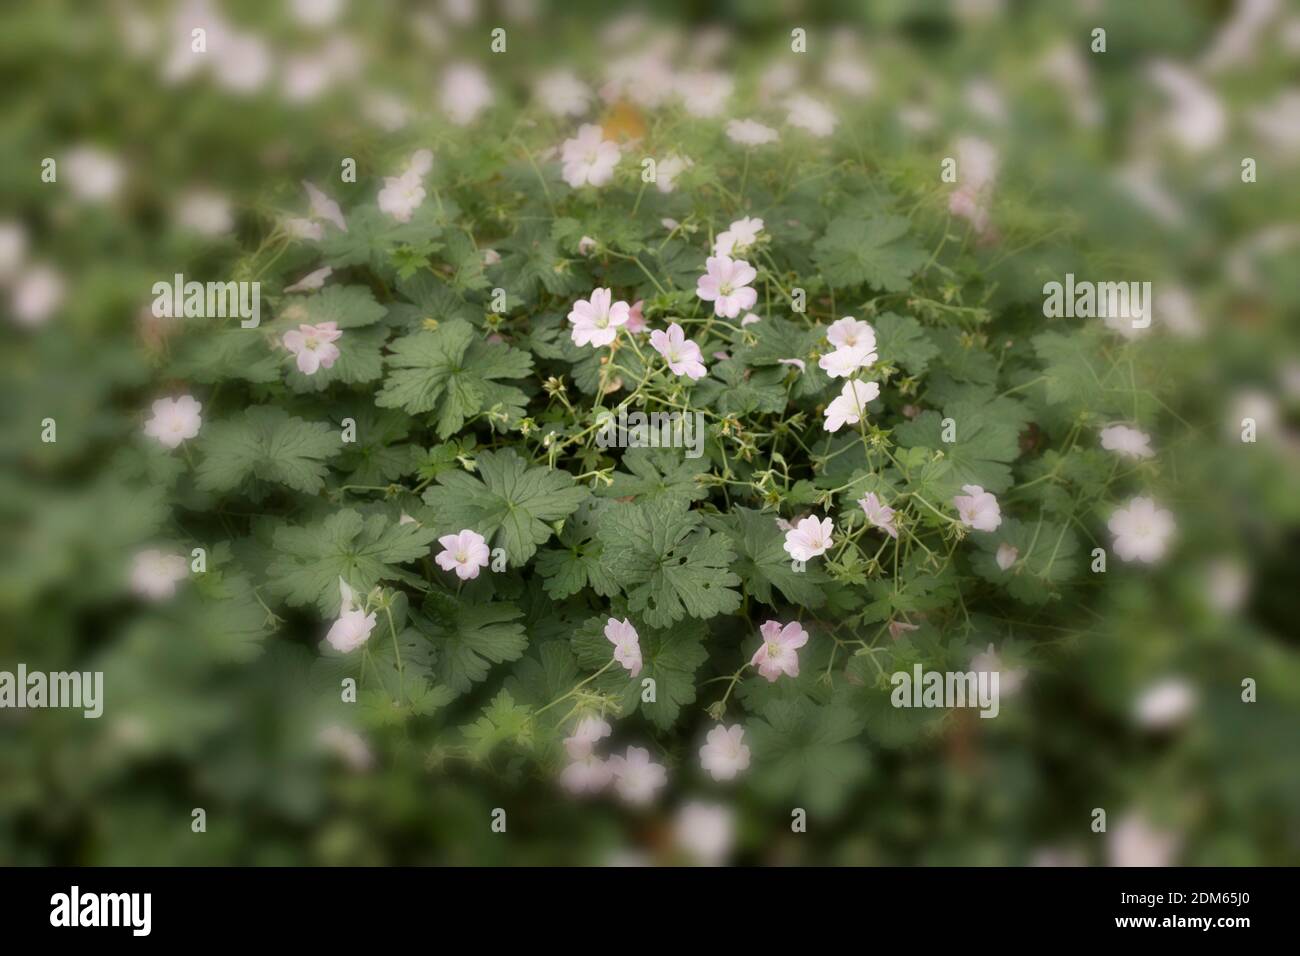 Geranium Dreamland flowers and foliage, natural plant portrait Stock Photo